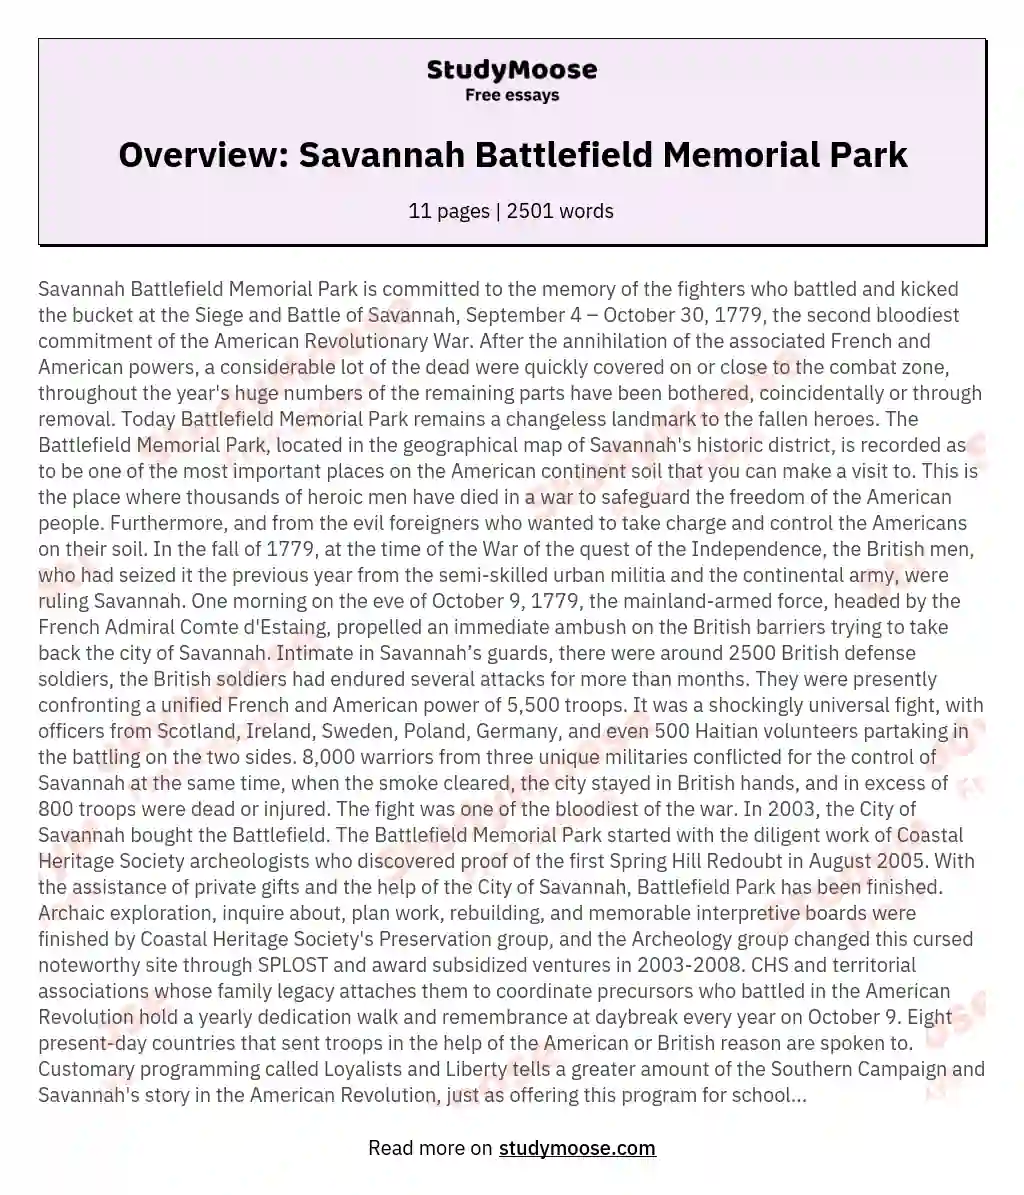 Overview: Savannah Battlefield Memorial Park essay